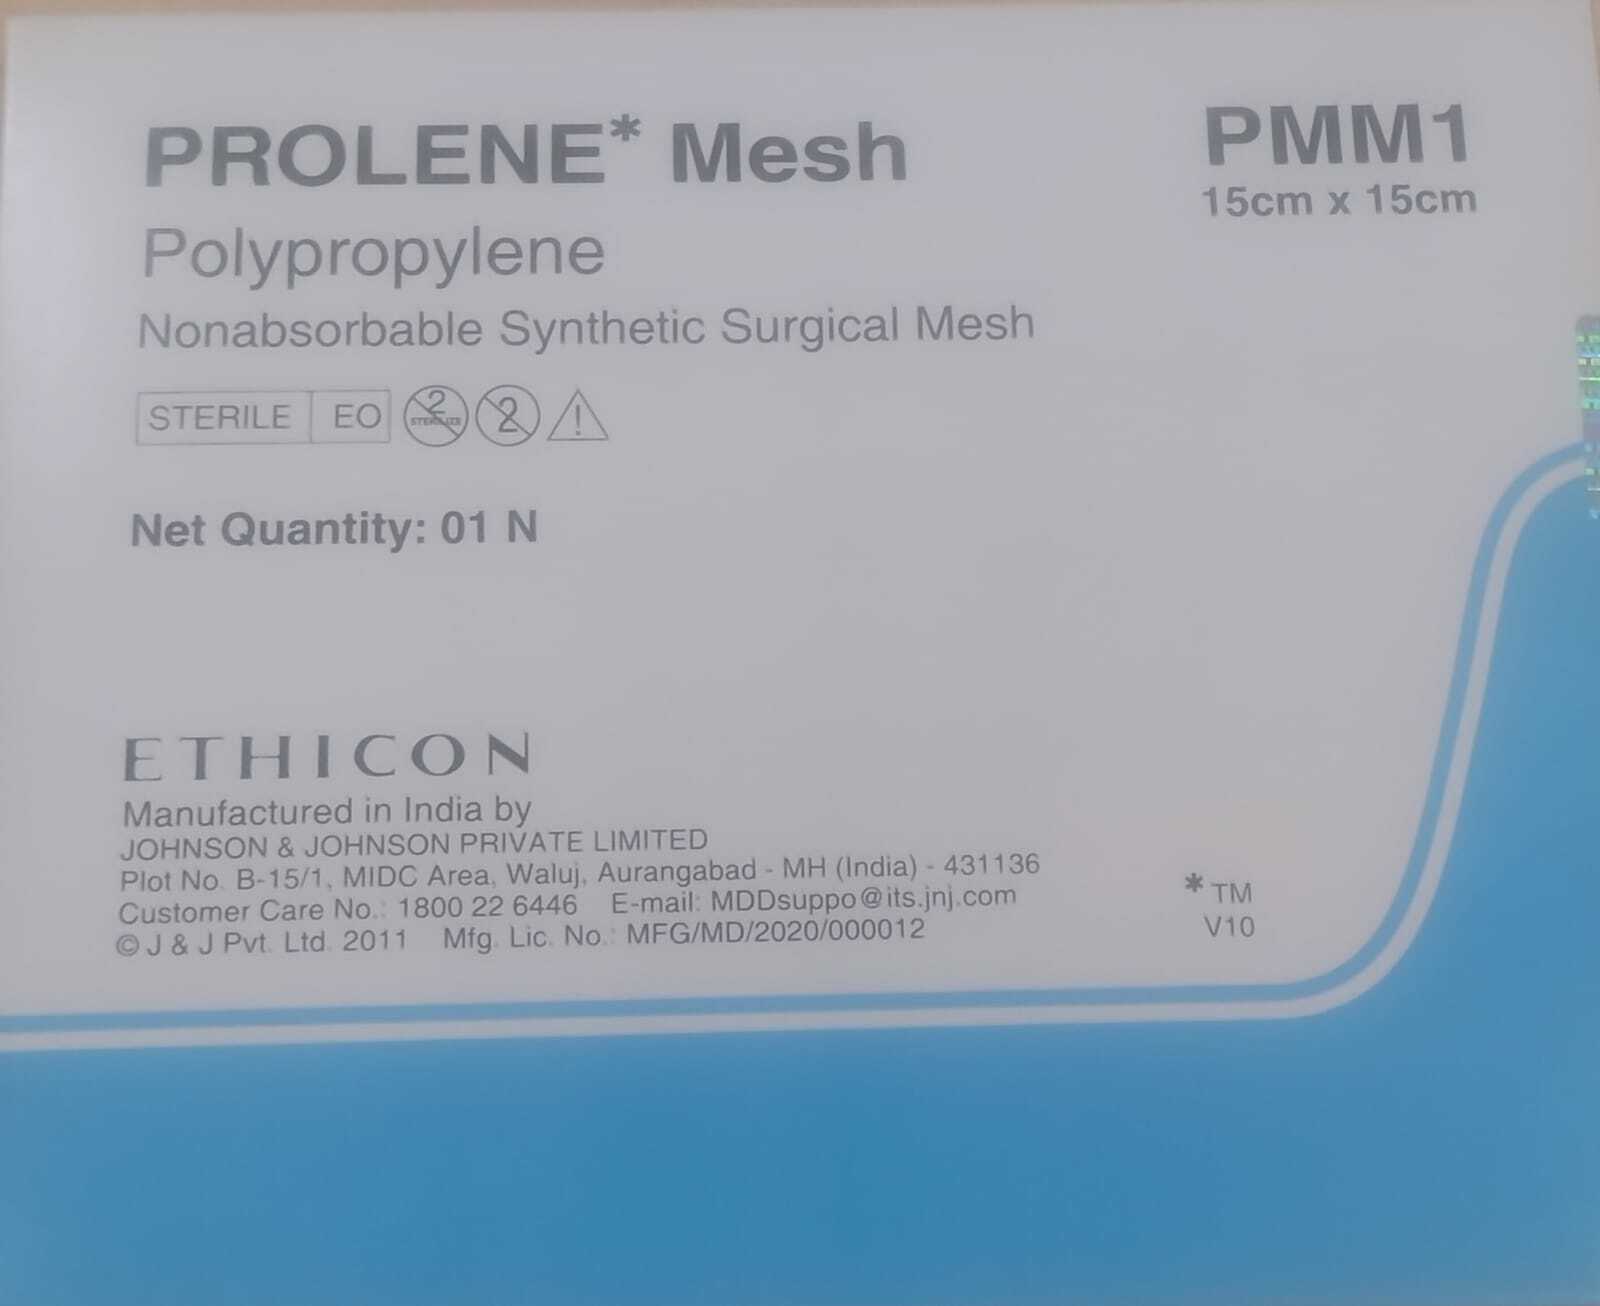 Ethicon Prolene Mesh (PMII)